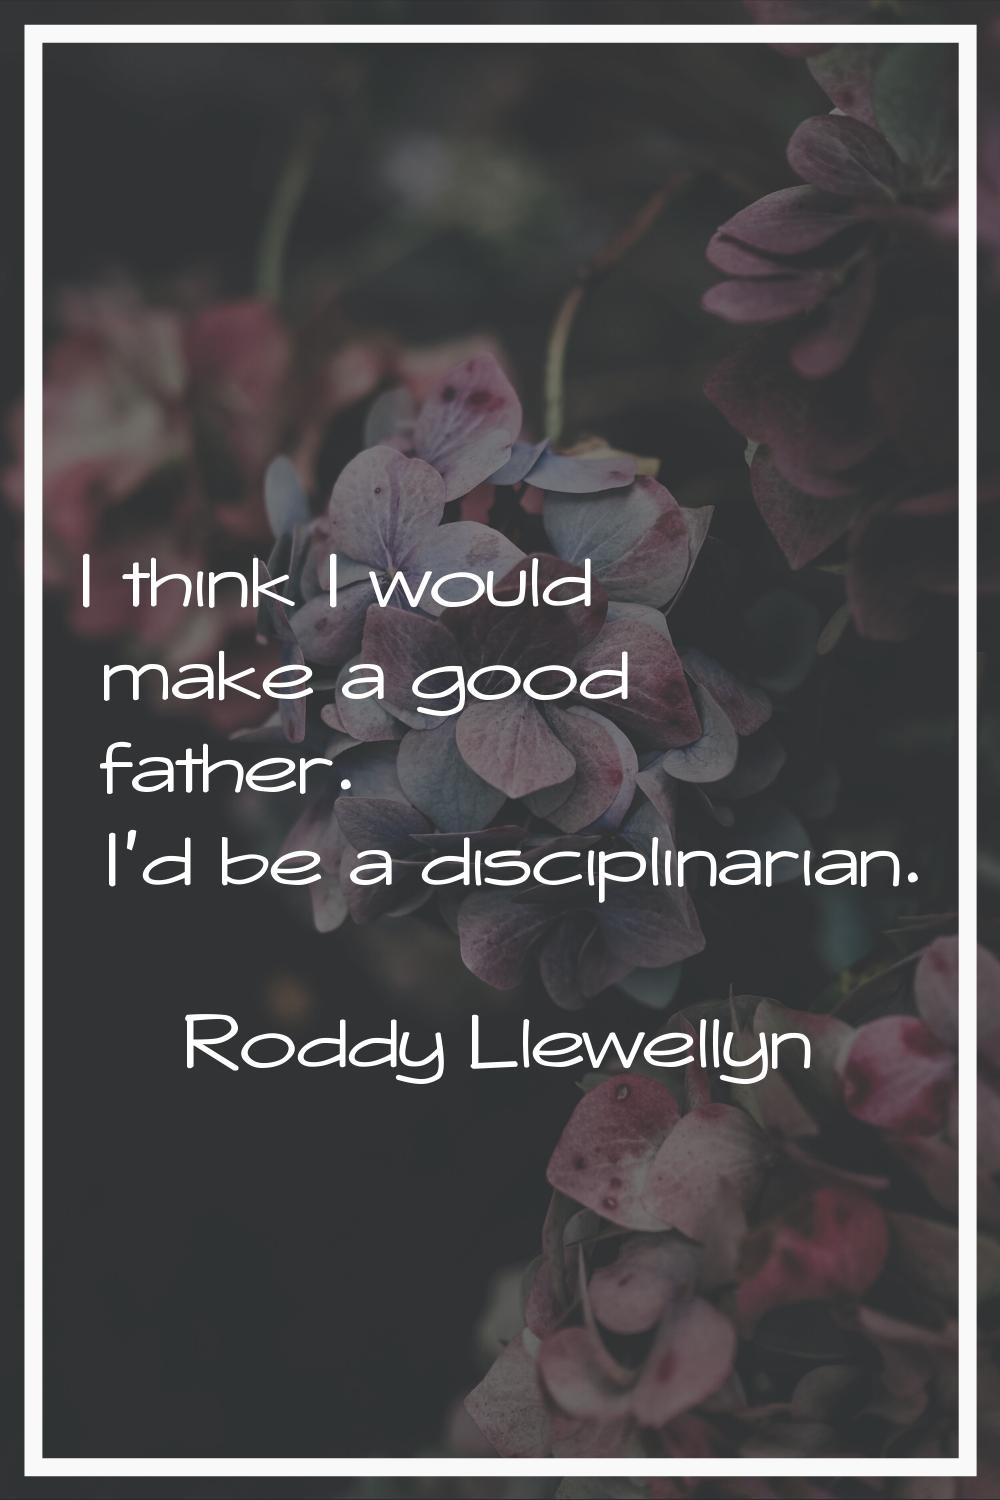 I think I would make a good father. I'd be a disciplinarian.